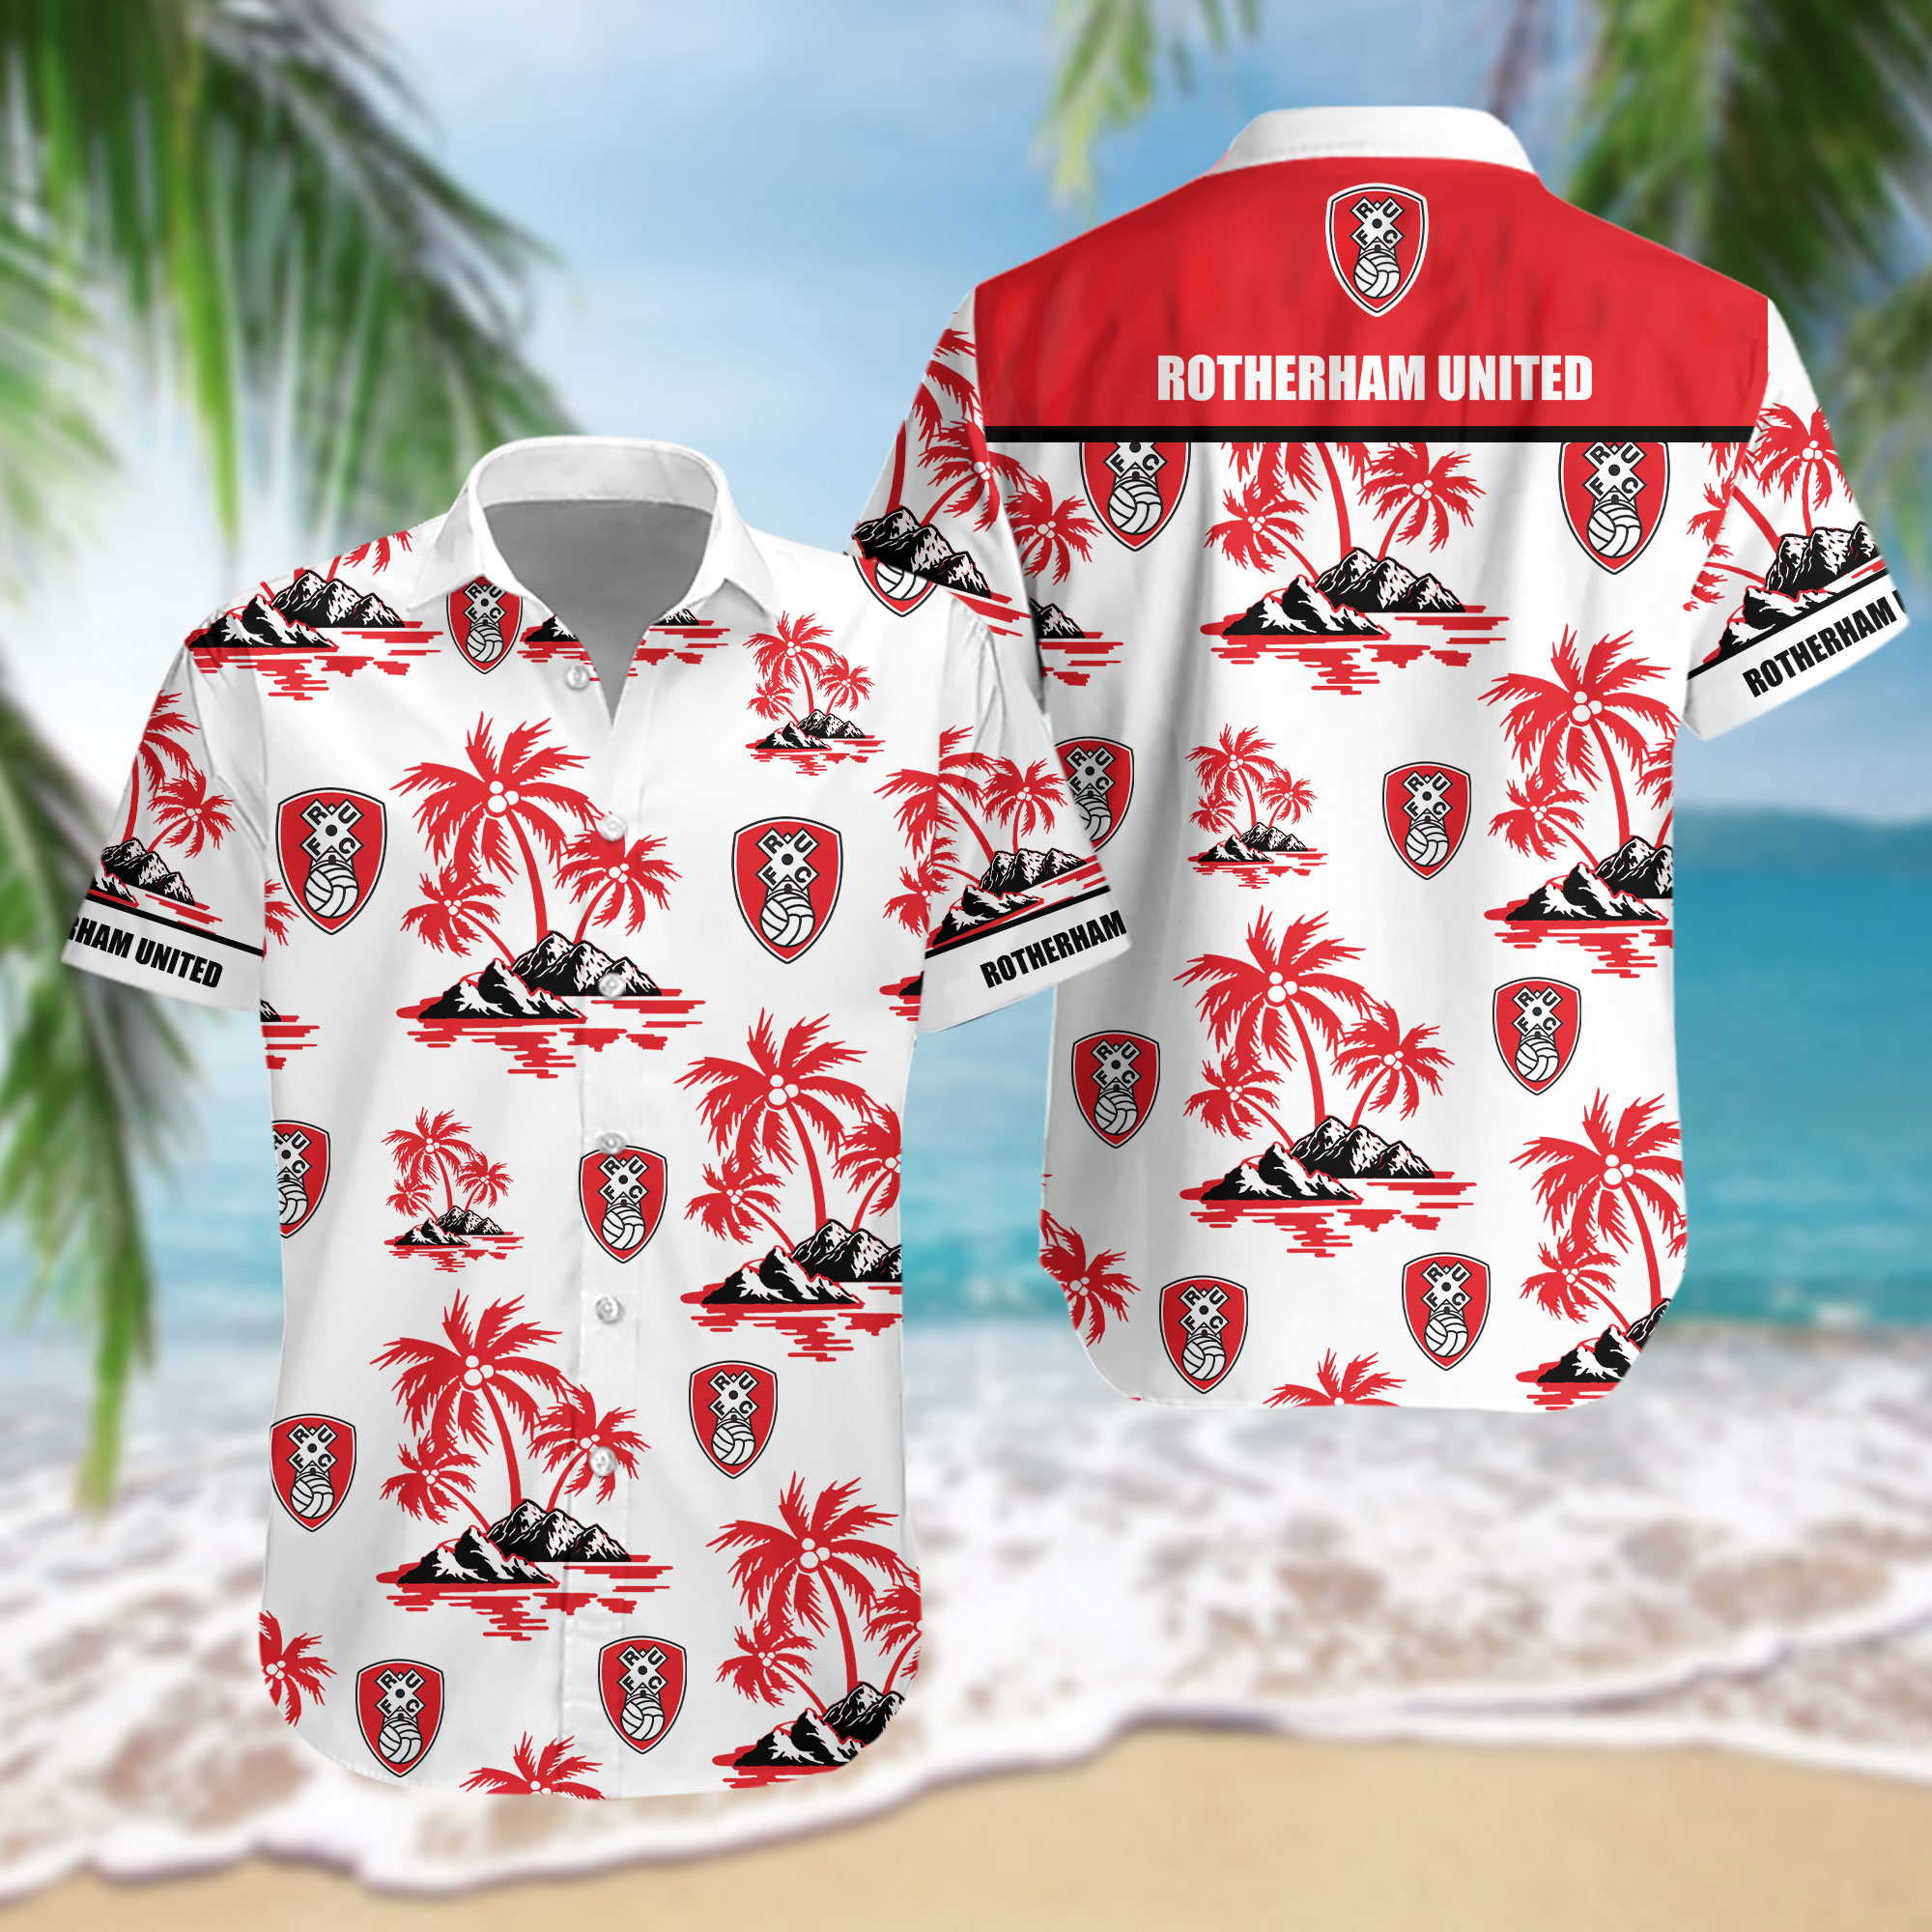 HOT EPL Rotherham United FC Tropical Shirt2